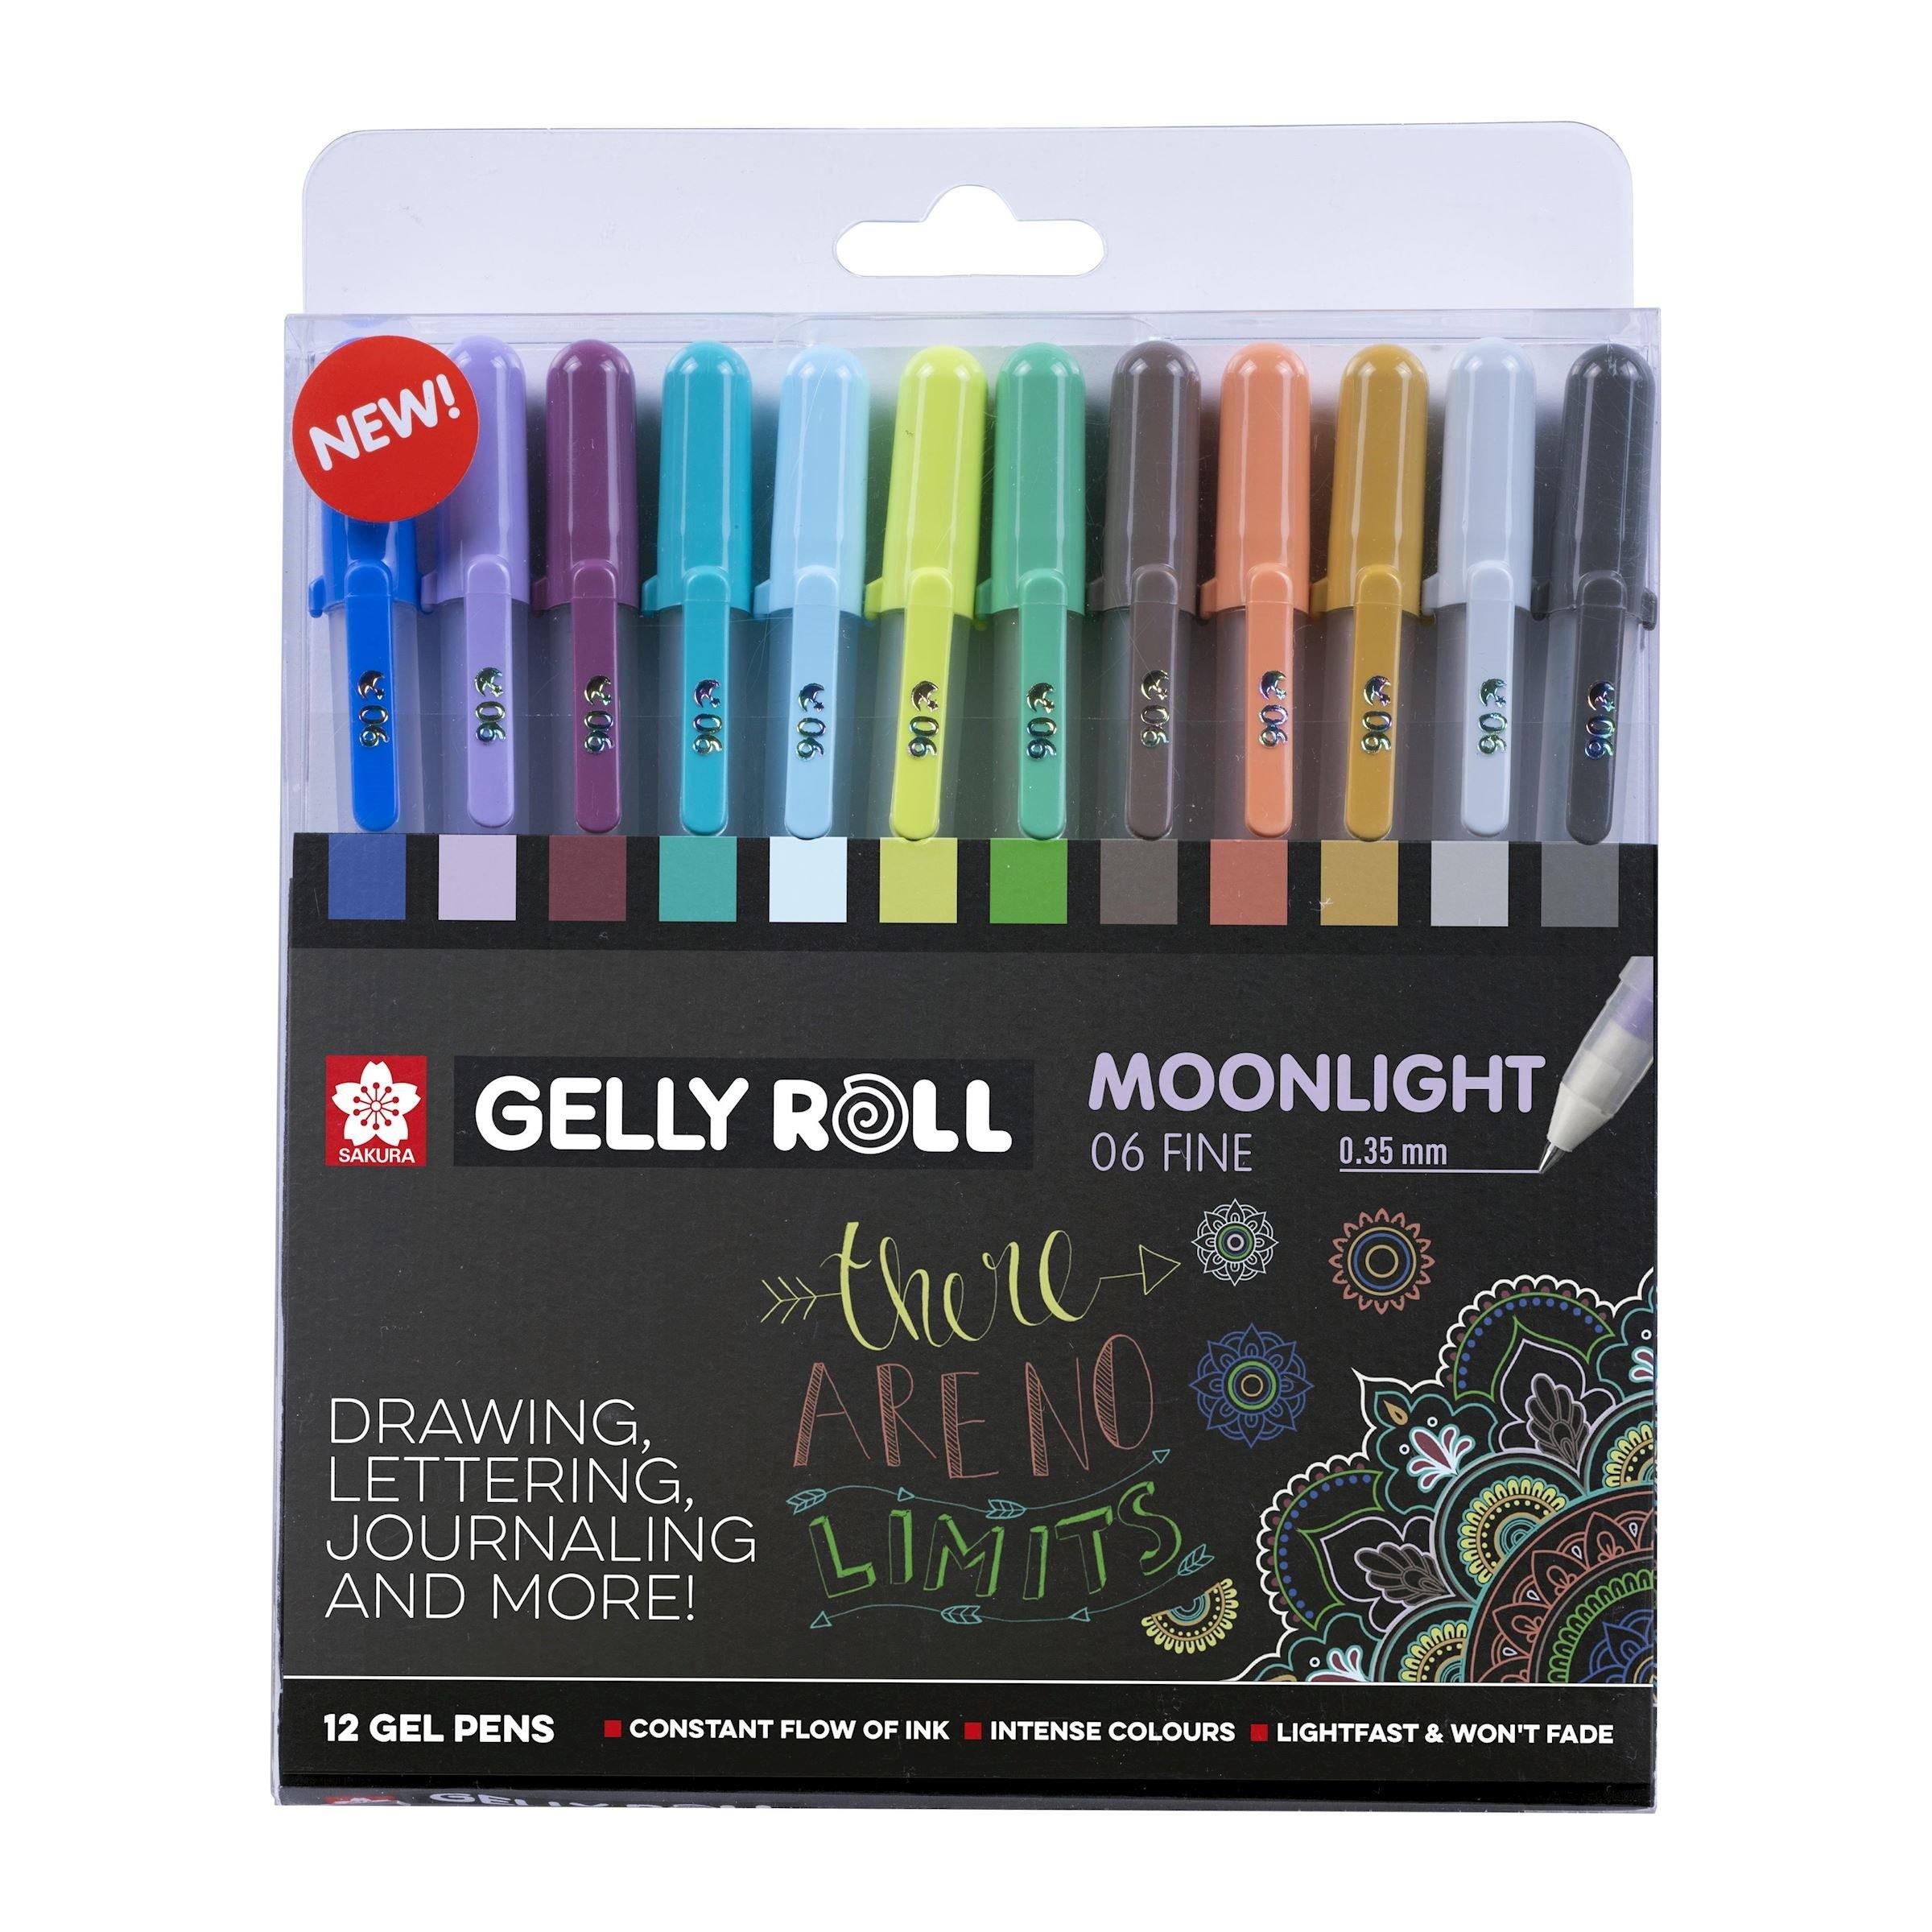 SAKURA Gelly Roll Moonlight Gel Pens - Happy Set (Pack of 3) - NEW